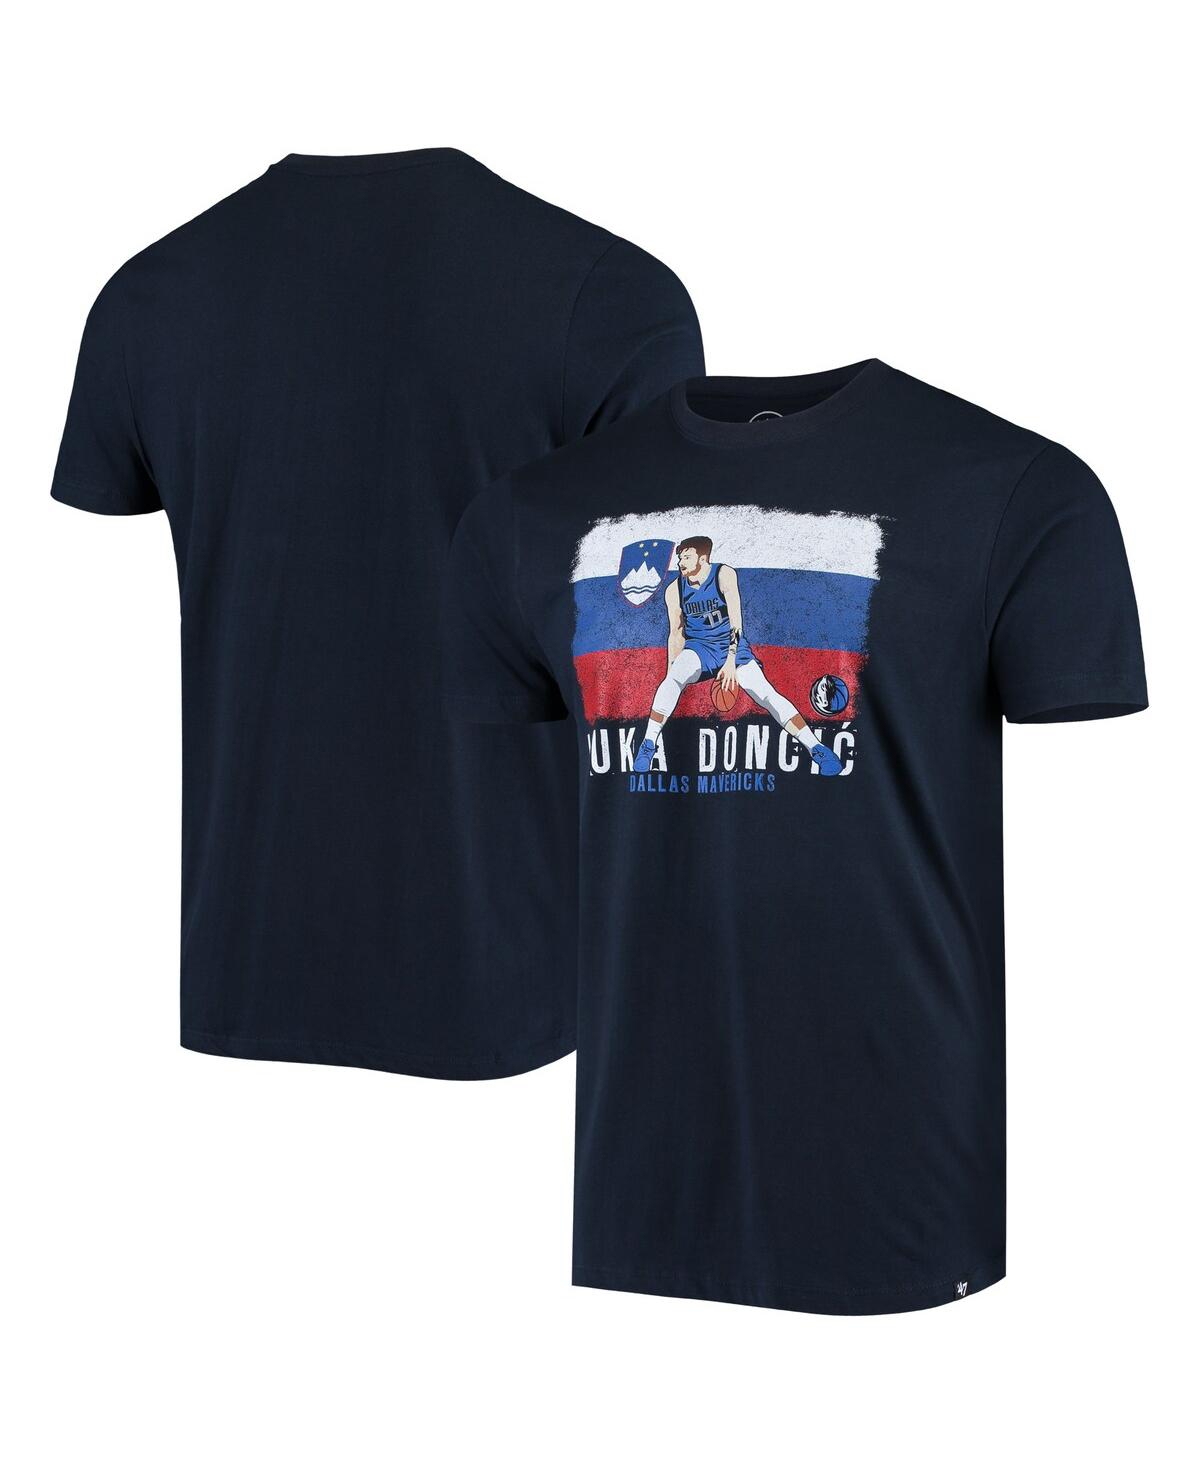 Men's Luka Doncic Navy Dallas Mavericks Player Graphic T-shirt - Navy